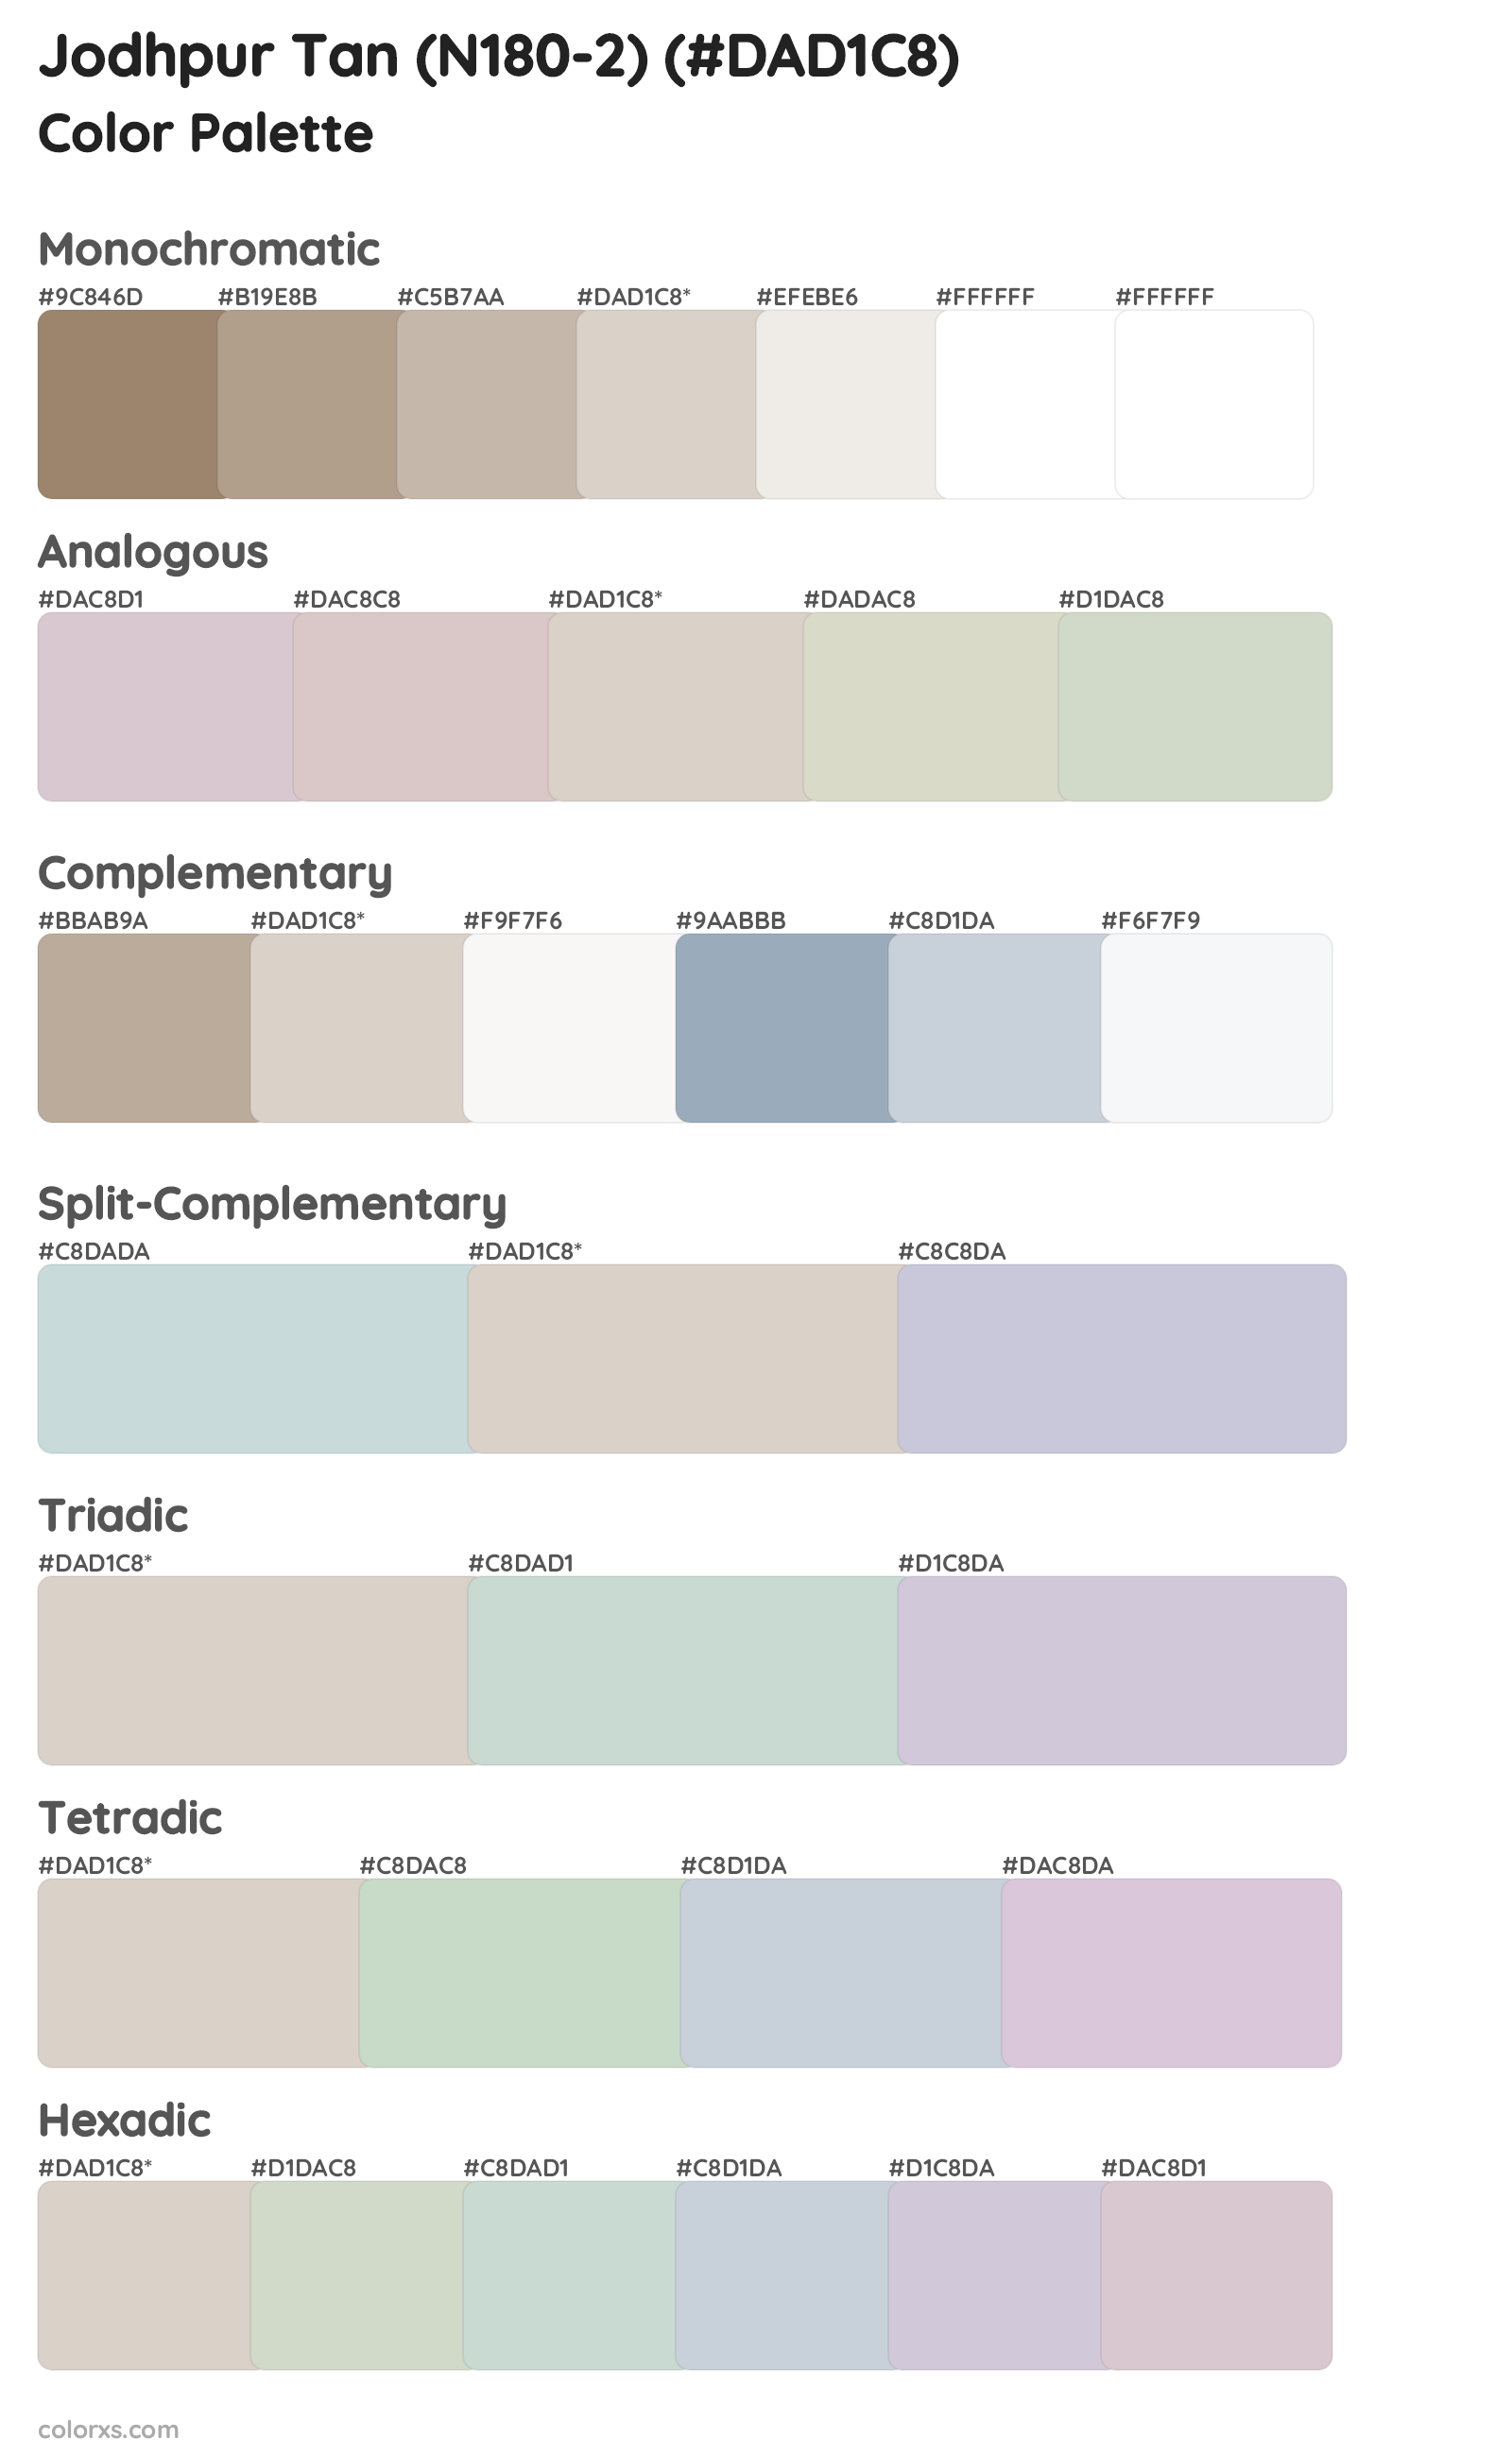 Jodhpur Tan (N180-2) Color Scheme Palettes